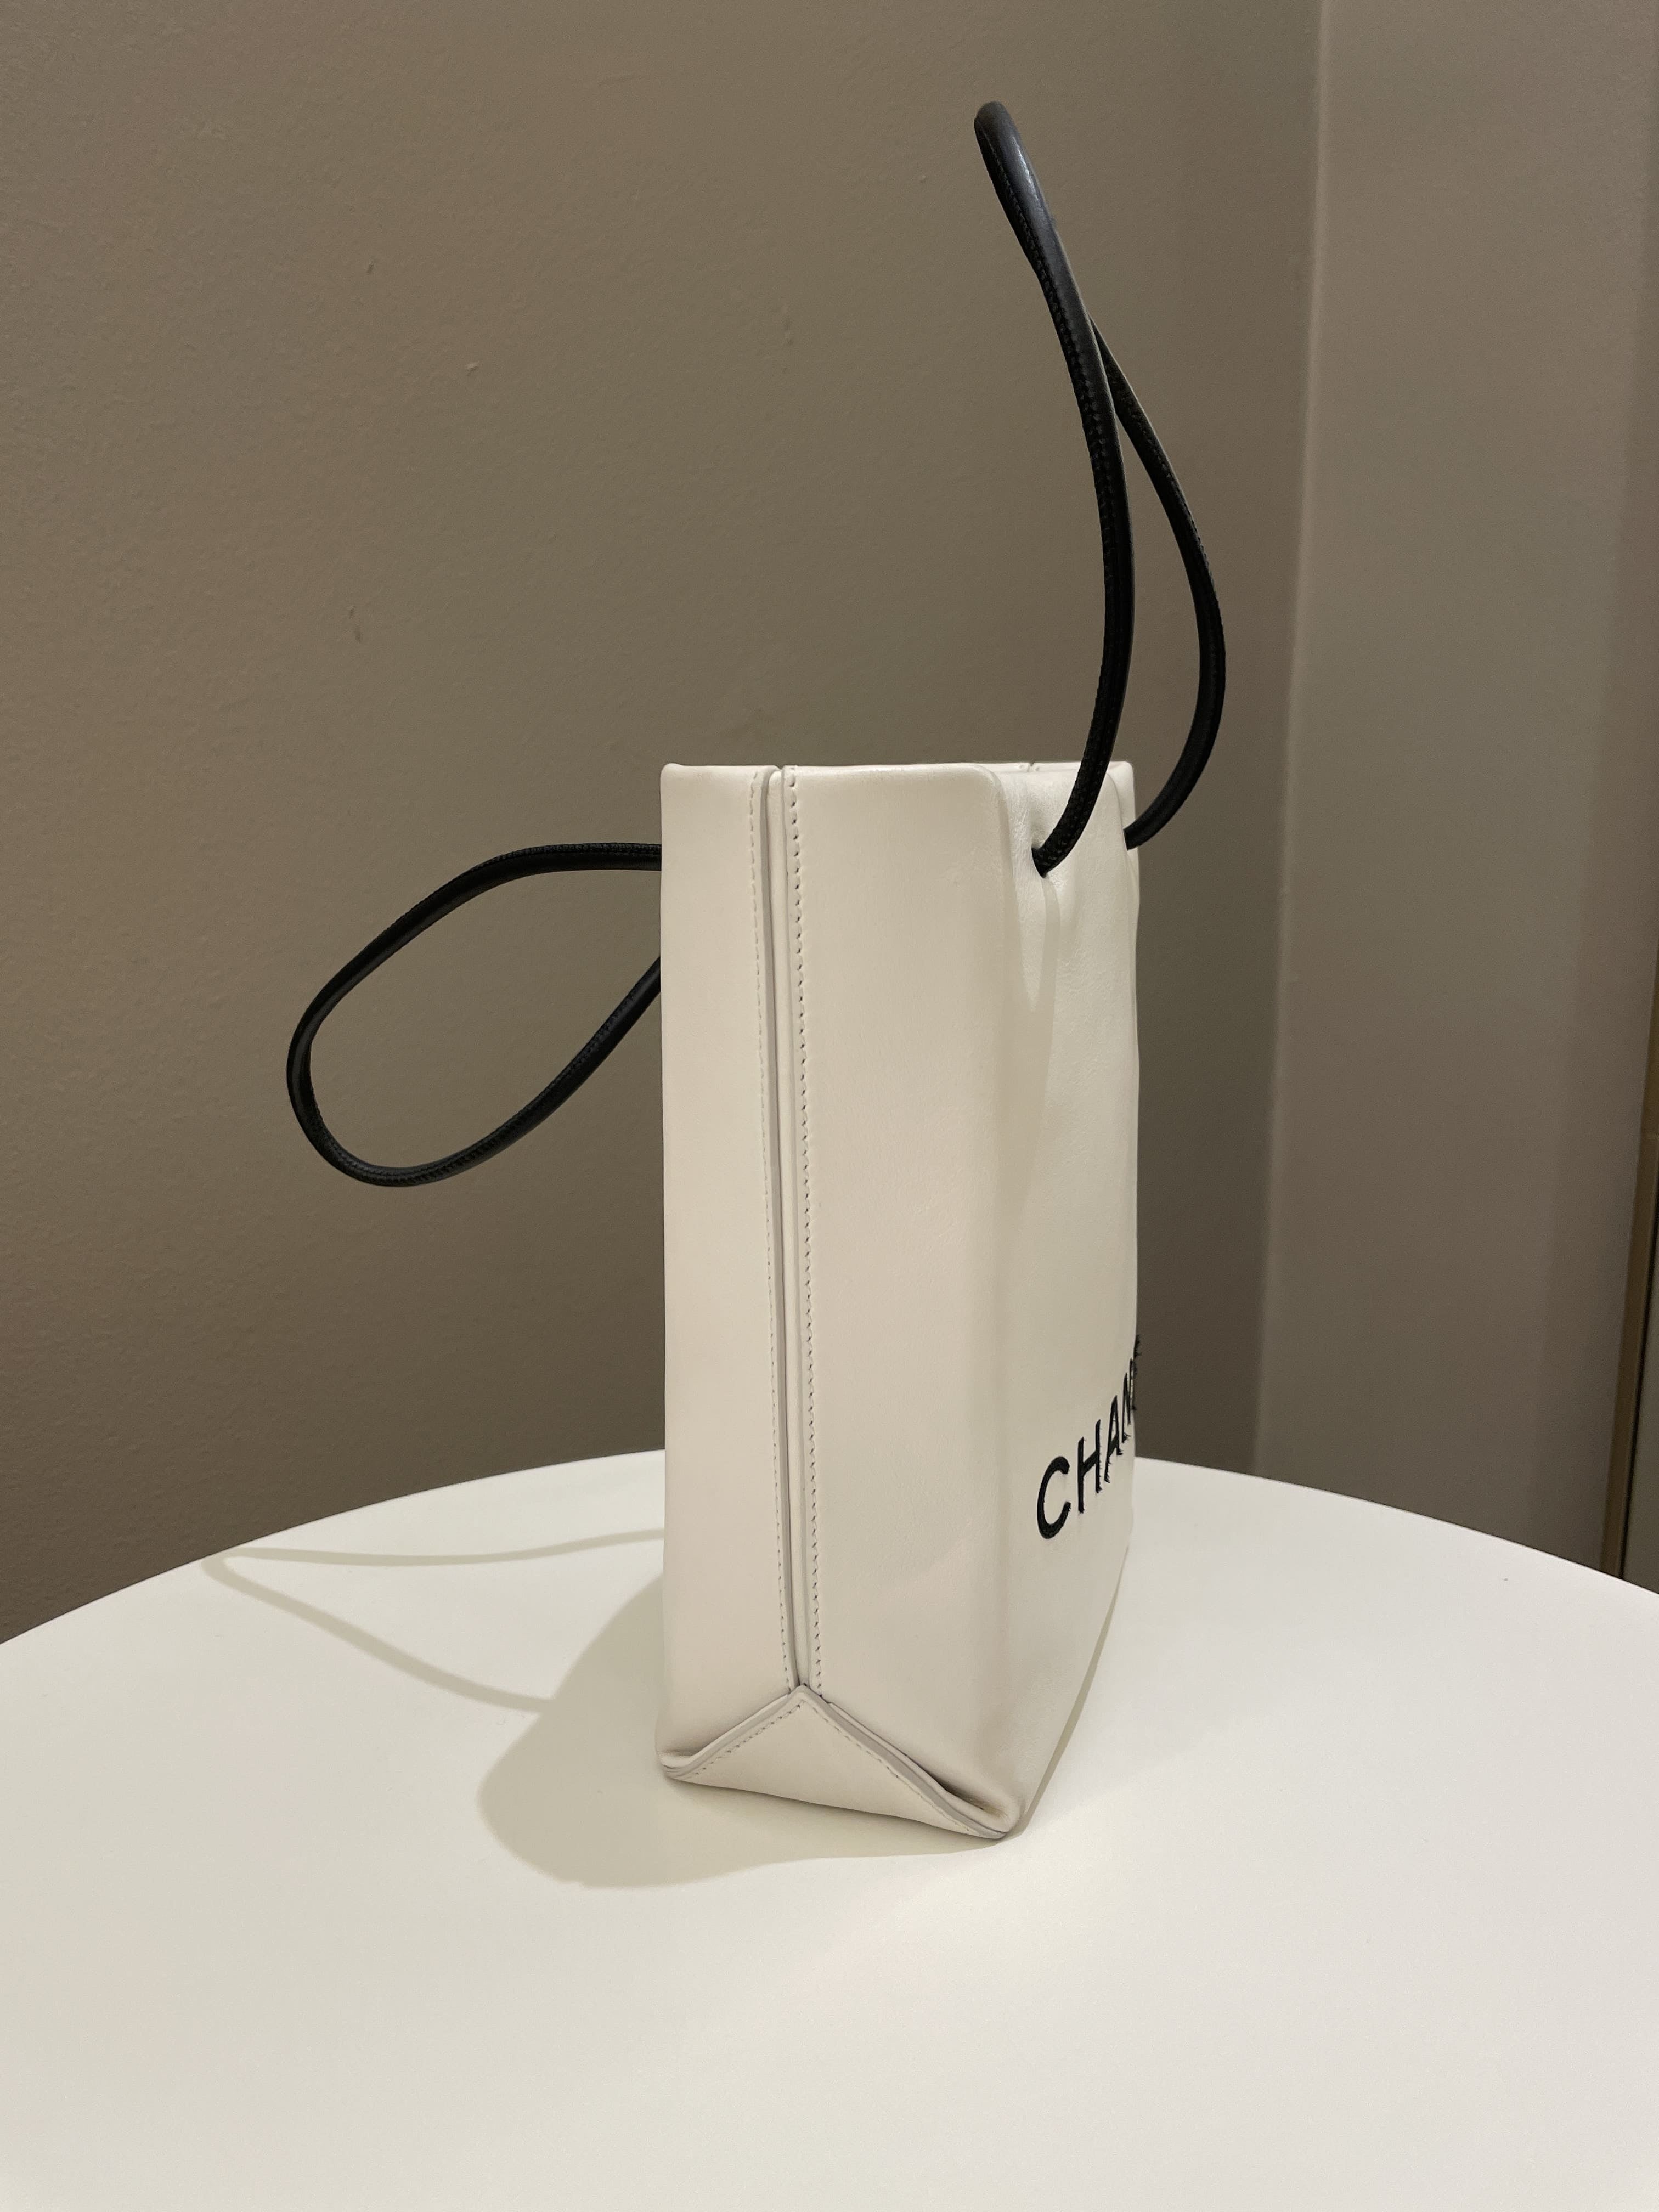 Chanel Vertical Shopping Bag Ivory / Black Calfskin